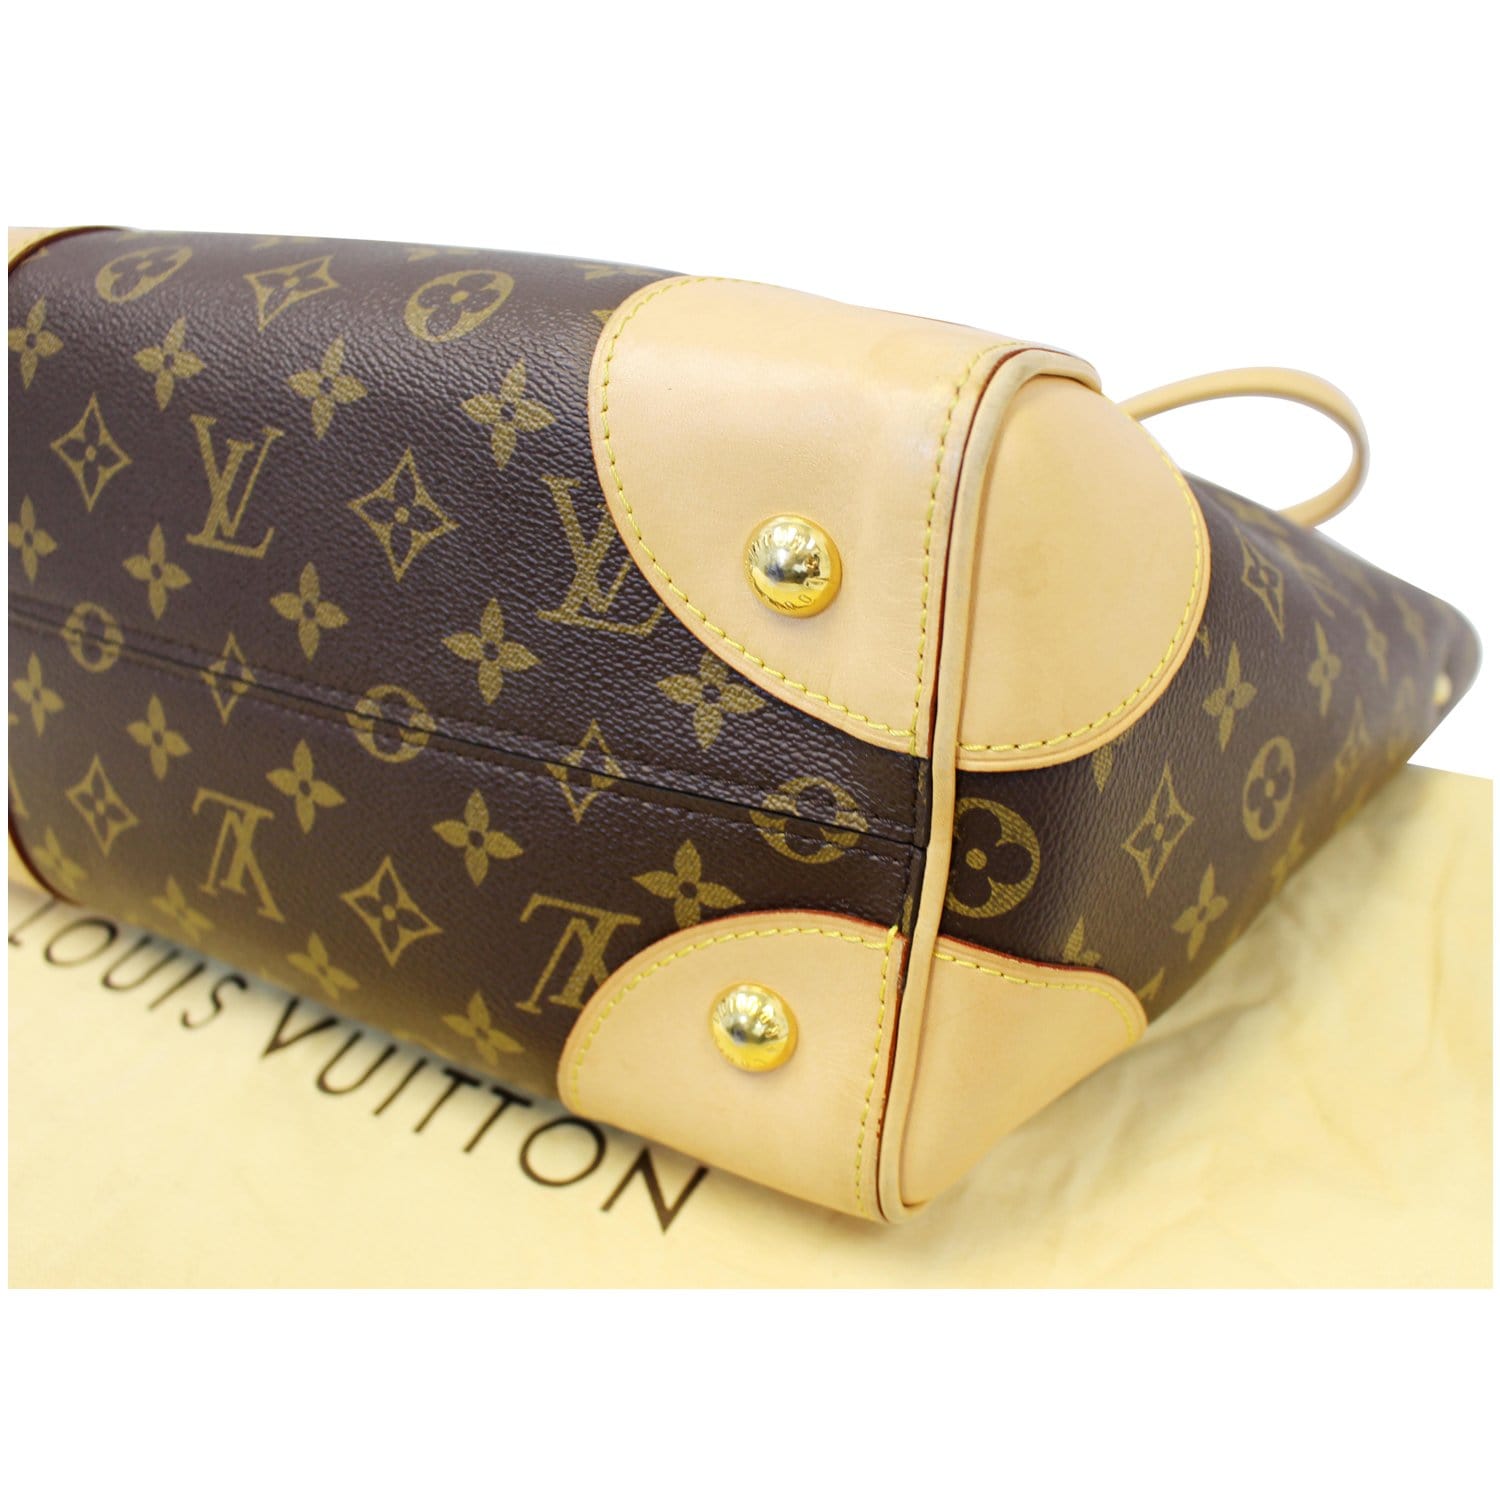 Phenix Louis Vuitton Handbags For Women